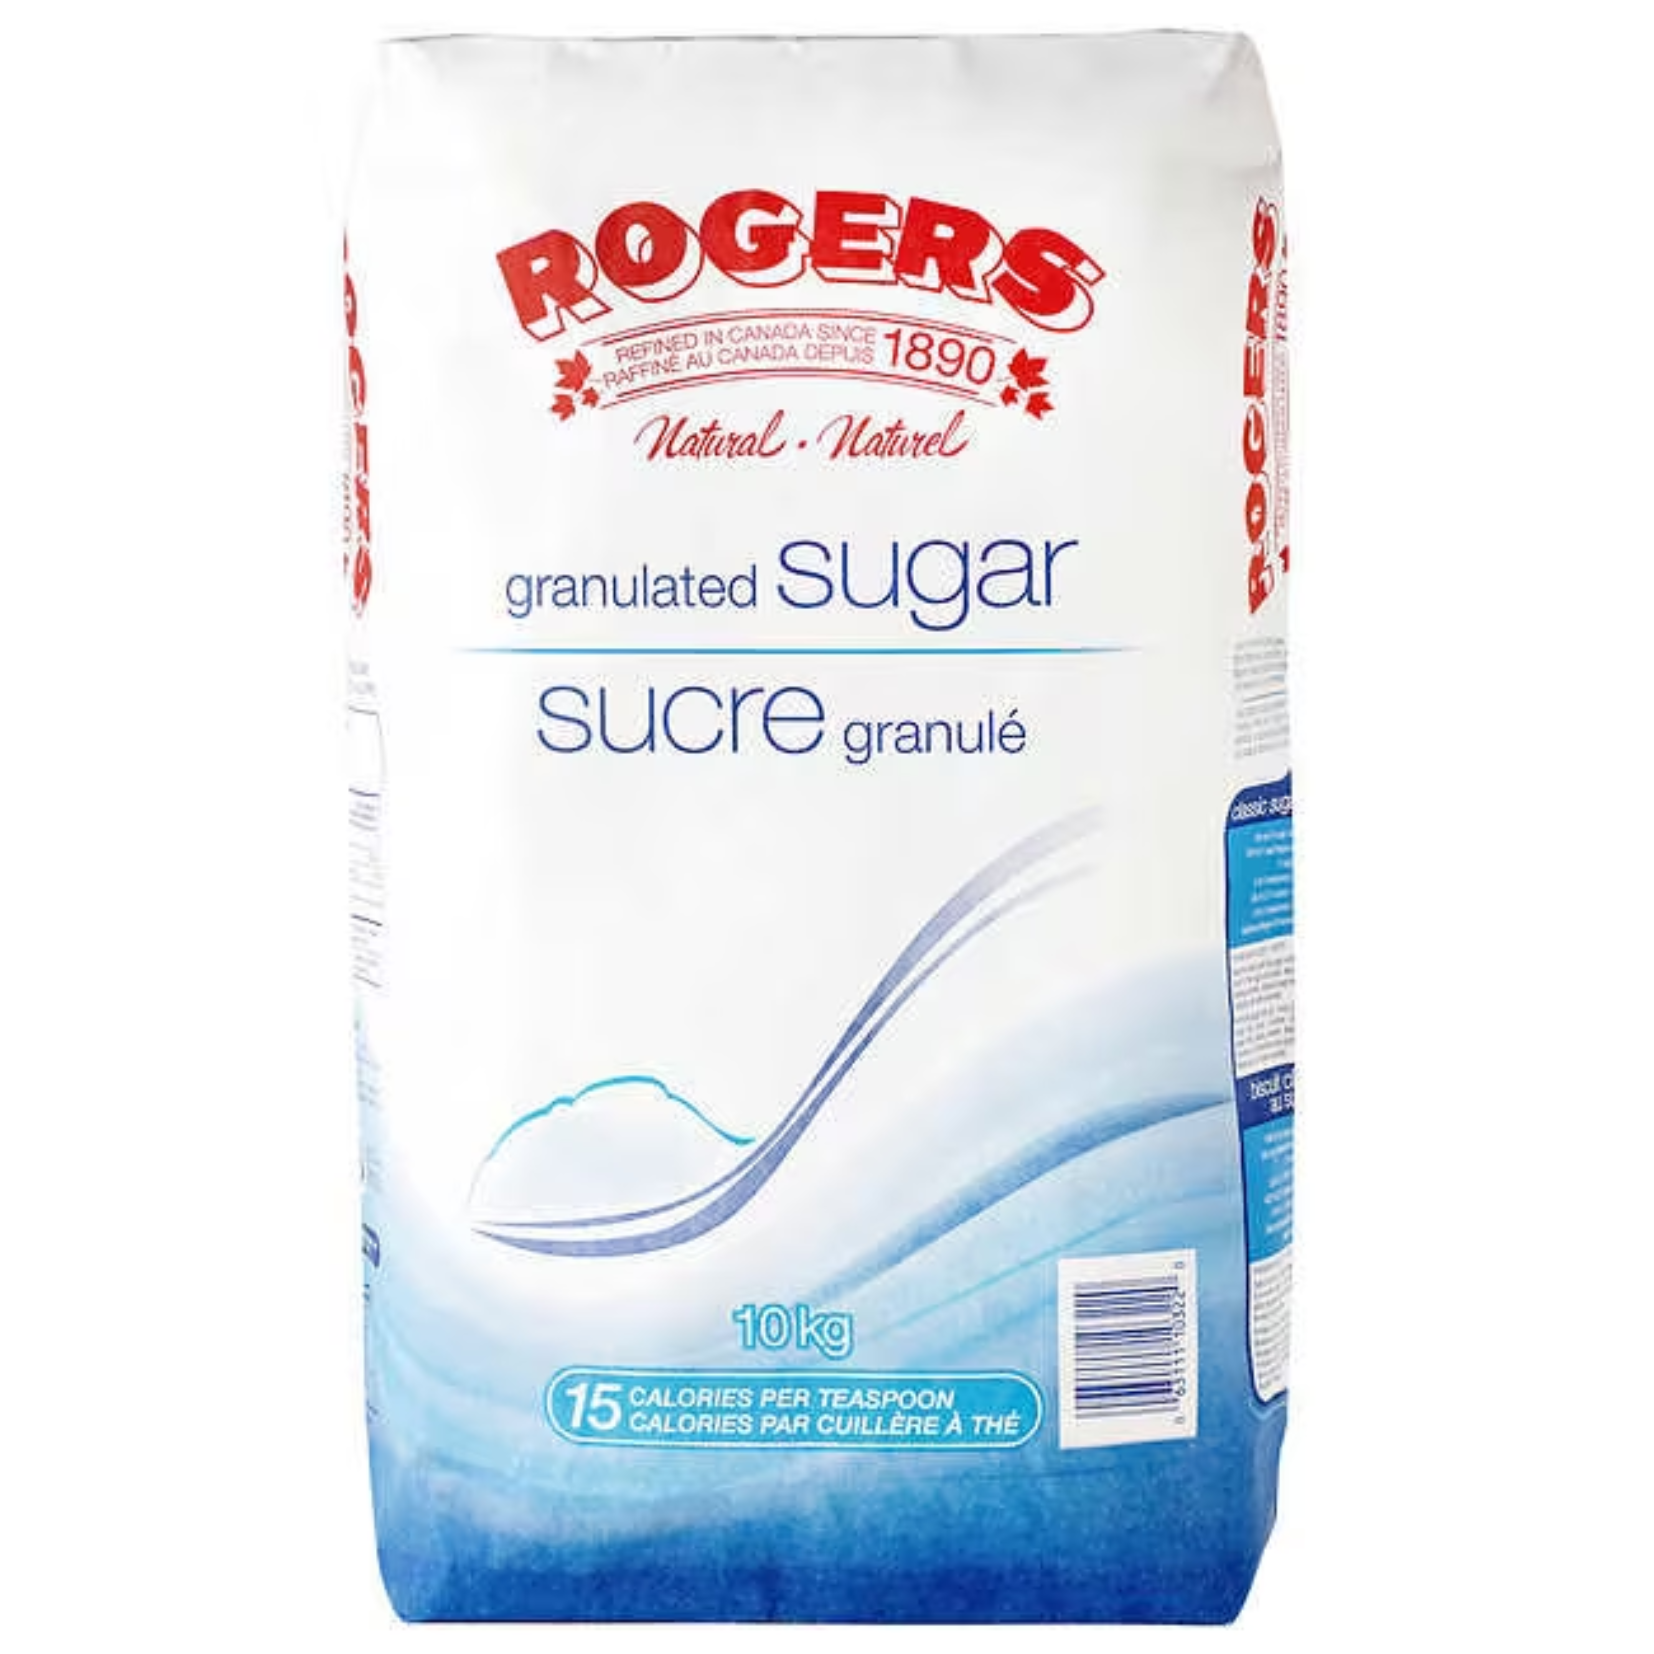 Rogers Granulated Sugar 10kg